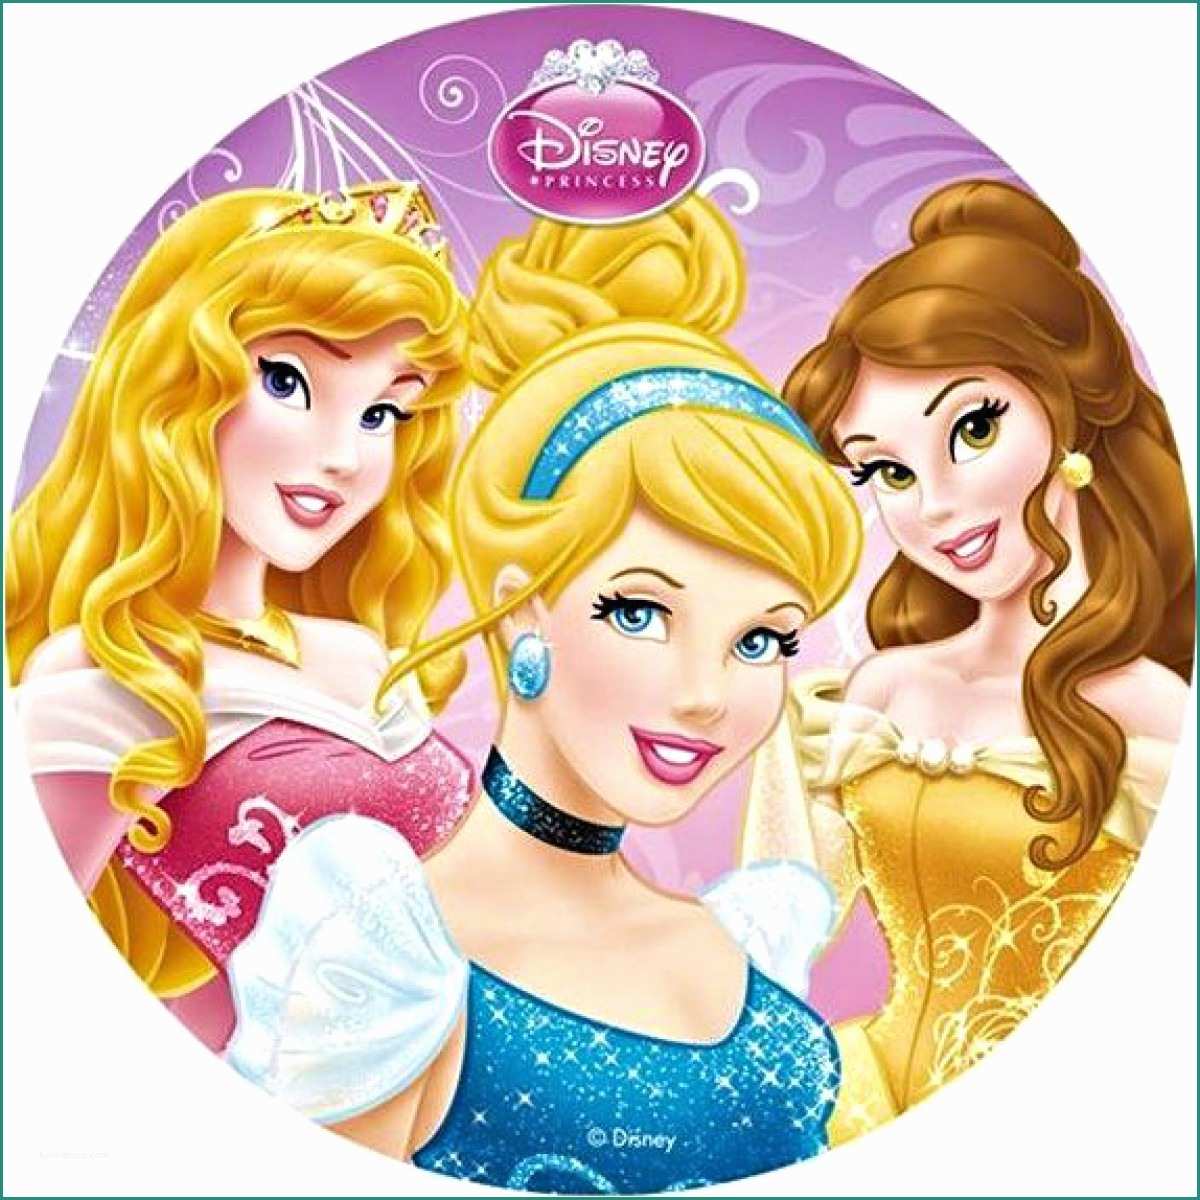 Immagini Principesse Disney Da Scaricare E Cialda Principesse Disney A soli 4 49